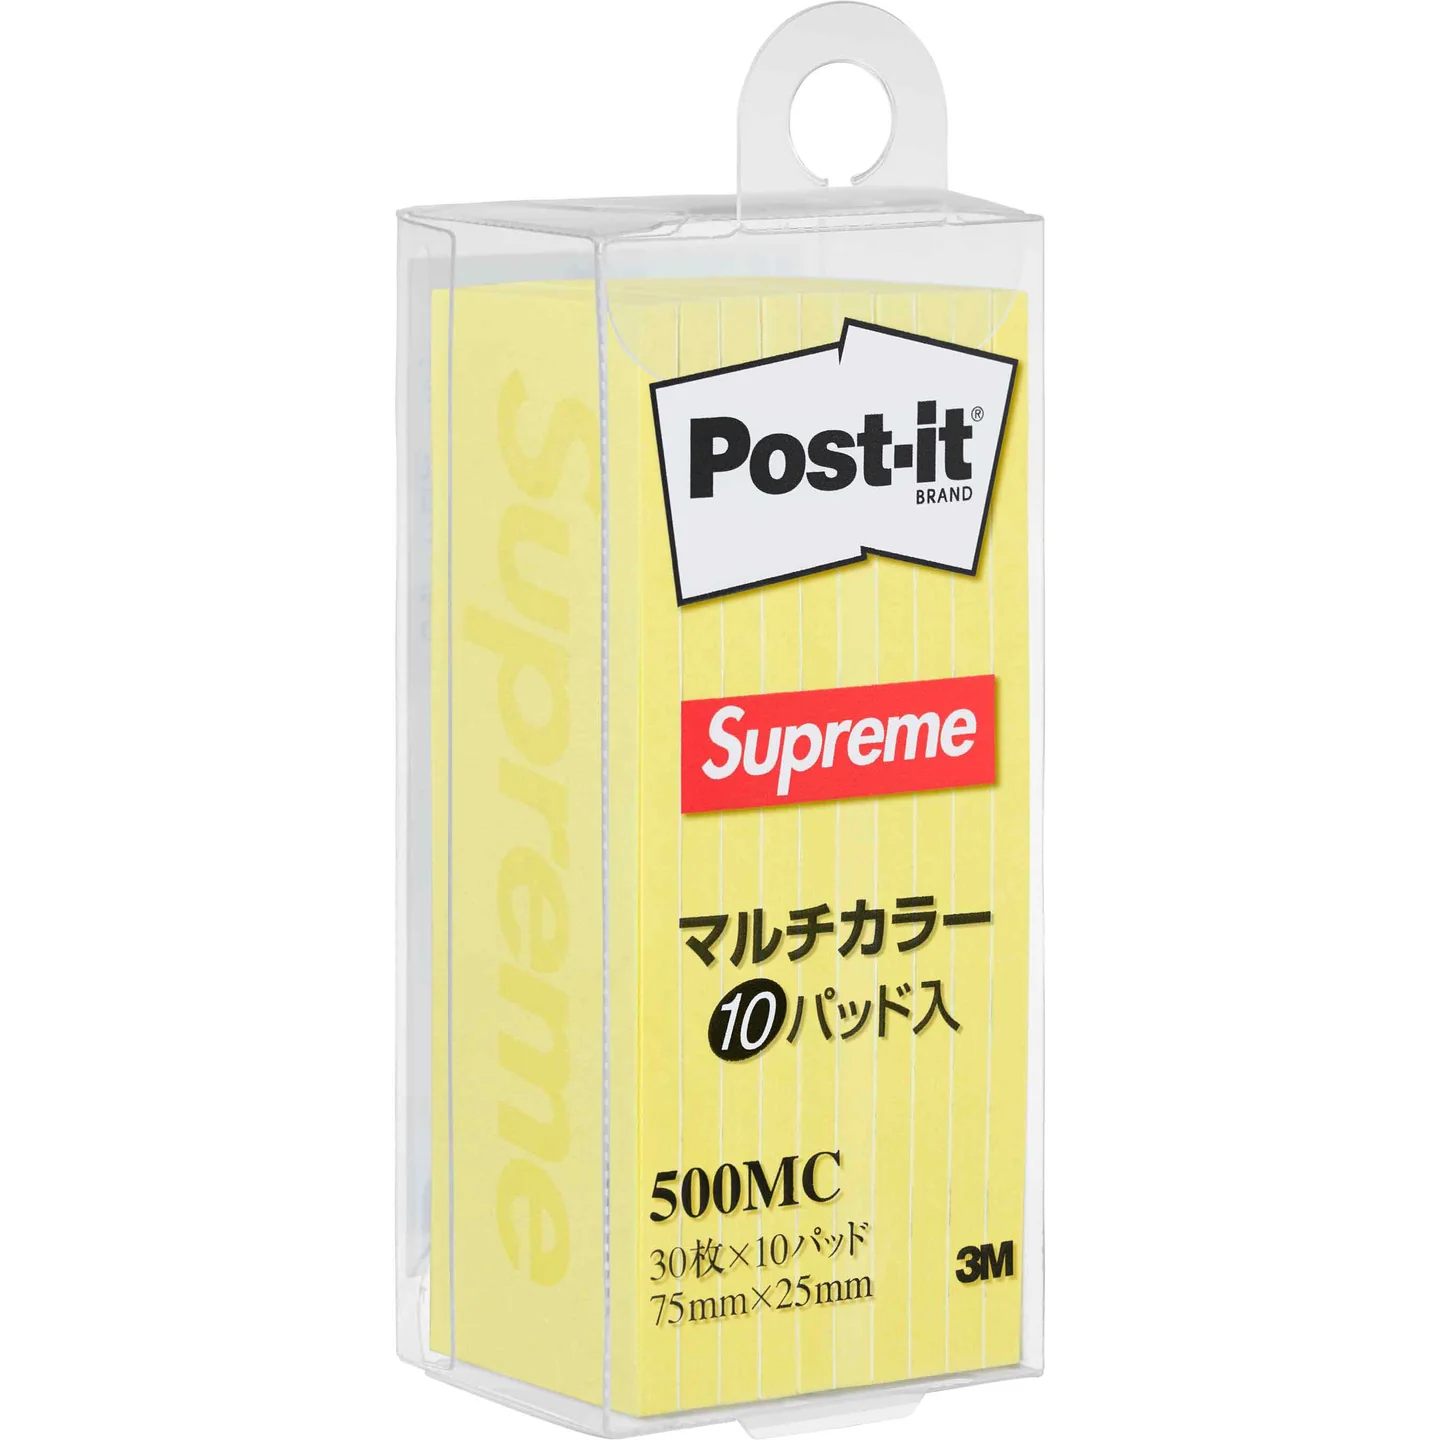 Supreme®/Post-its®